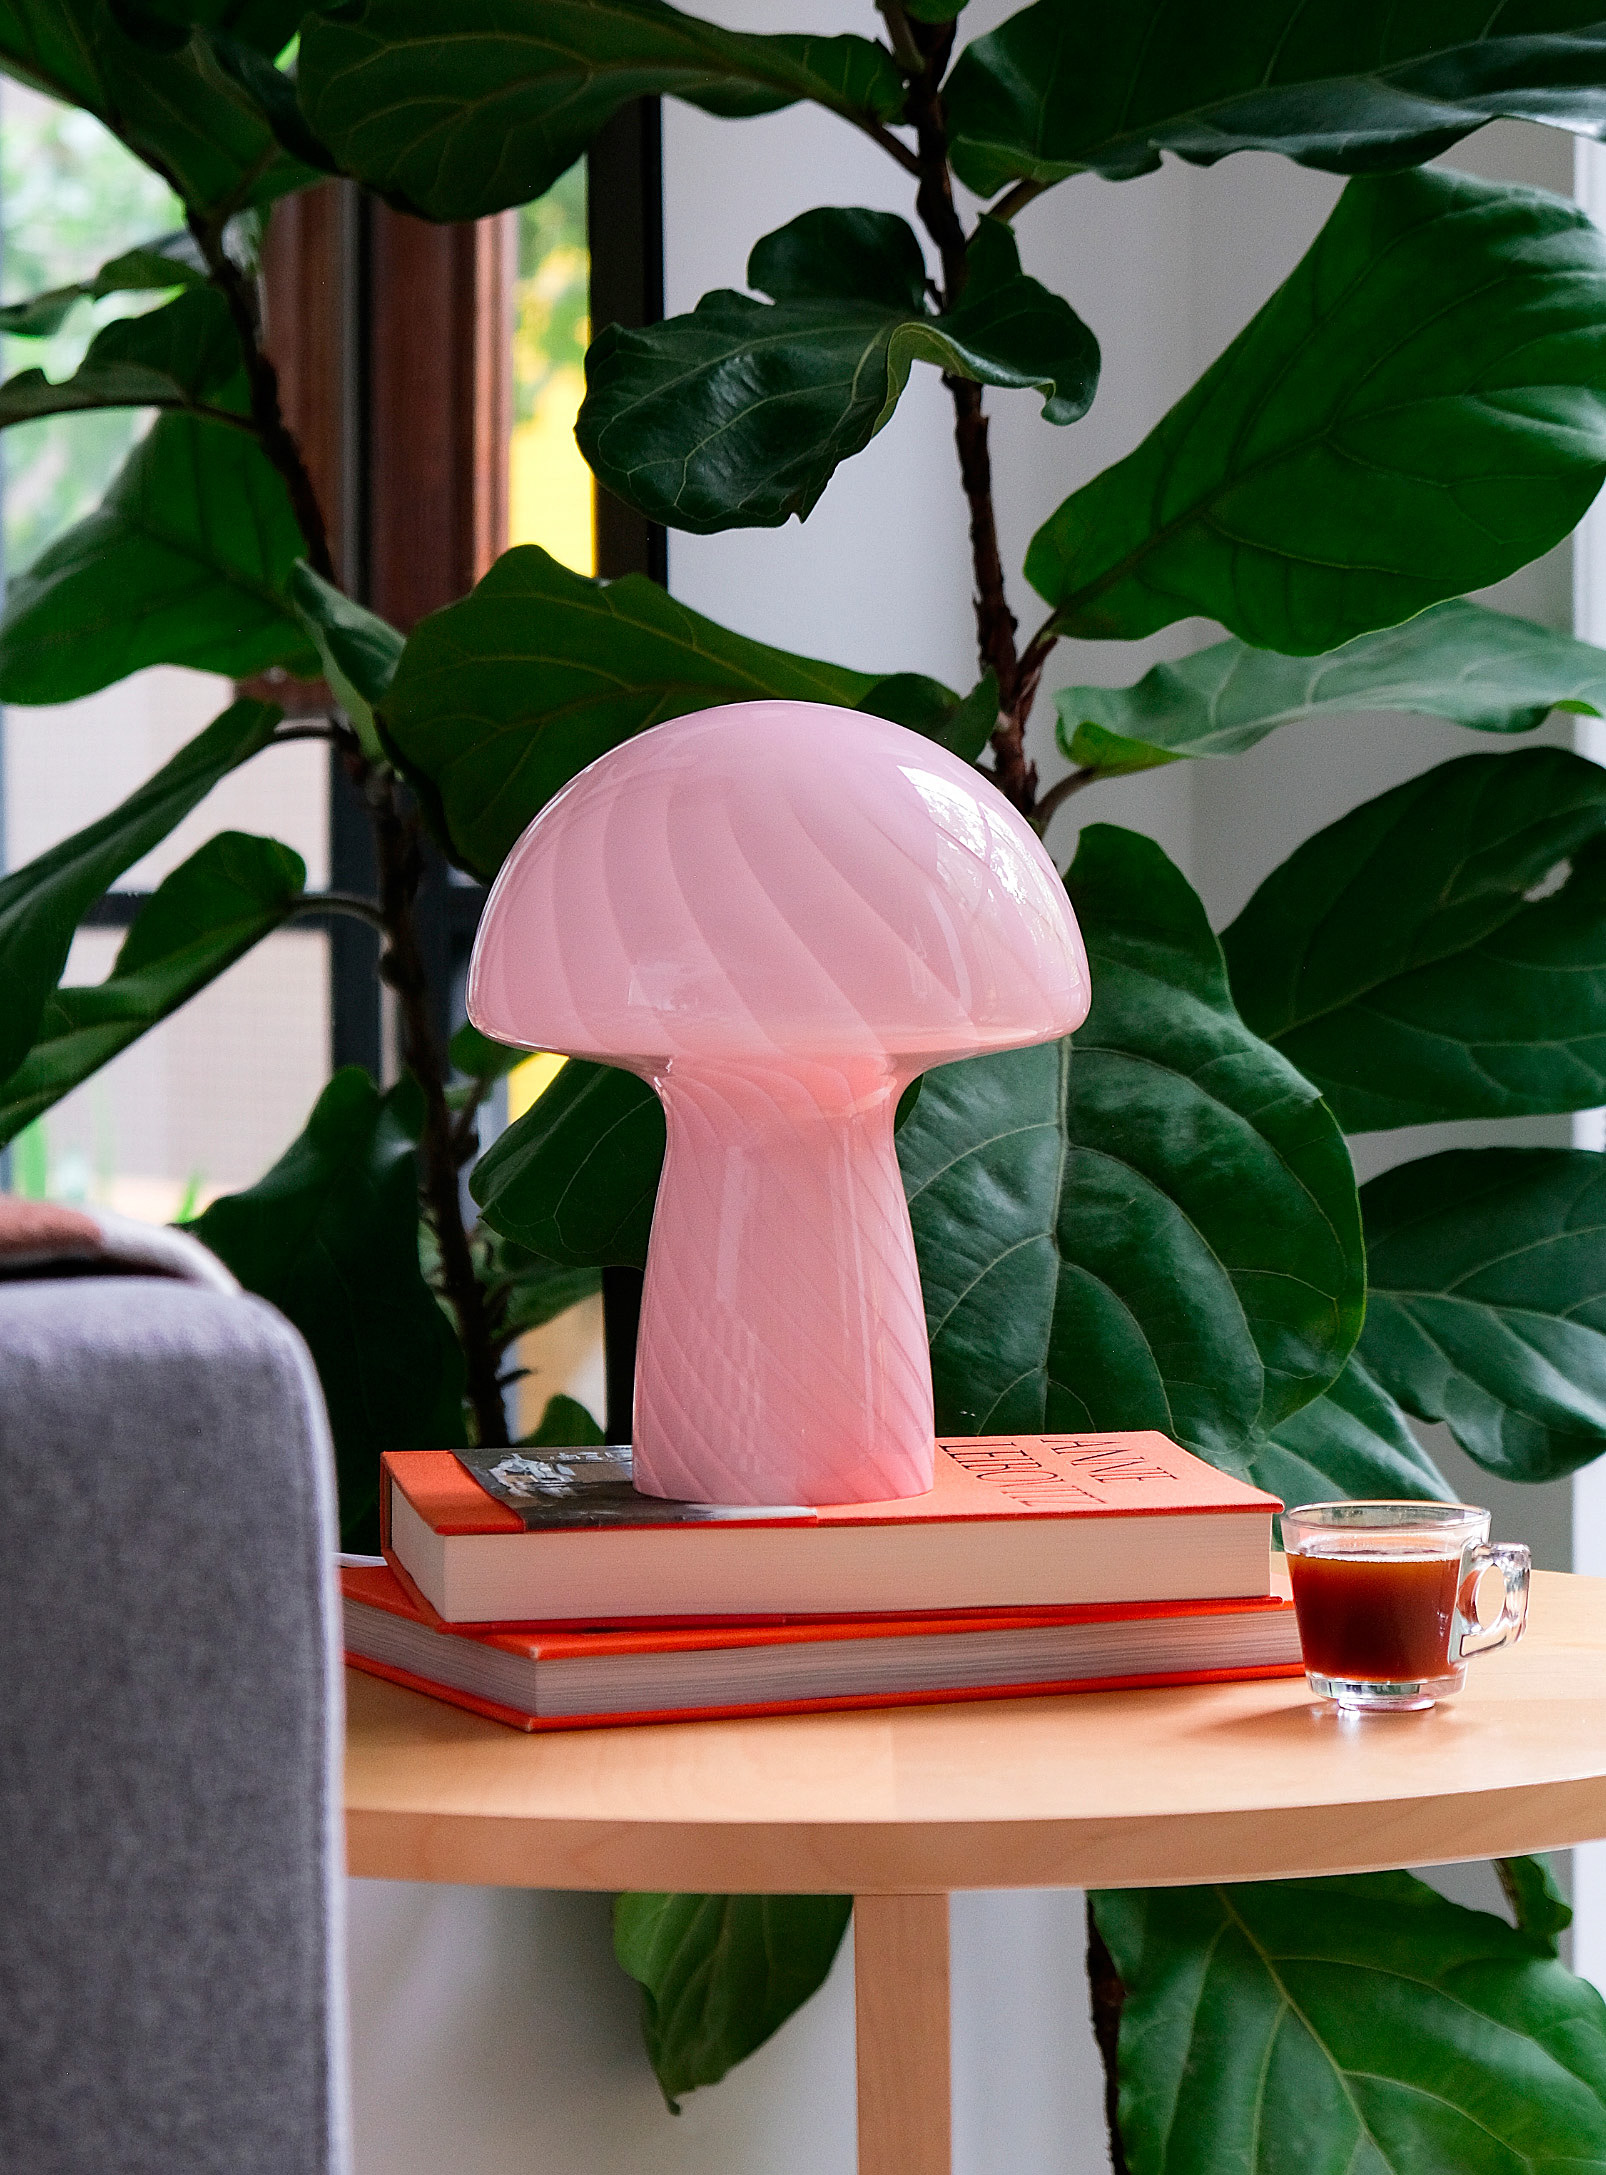 Humber Small Mushroom Table Lamp In Pink